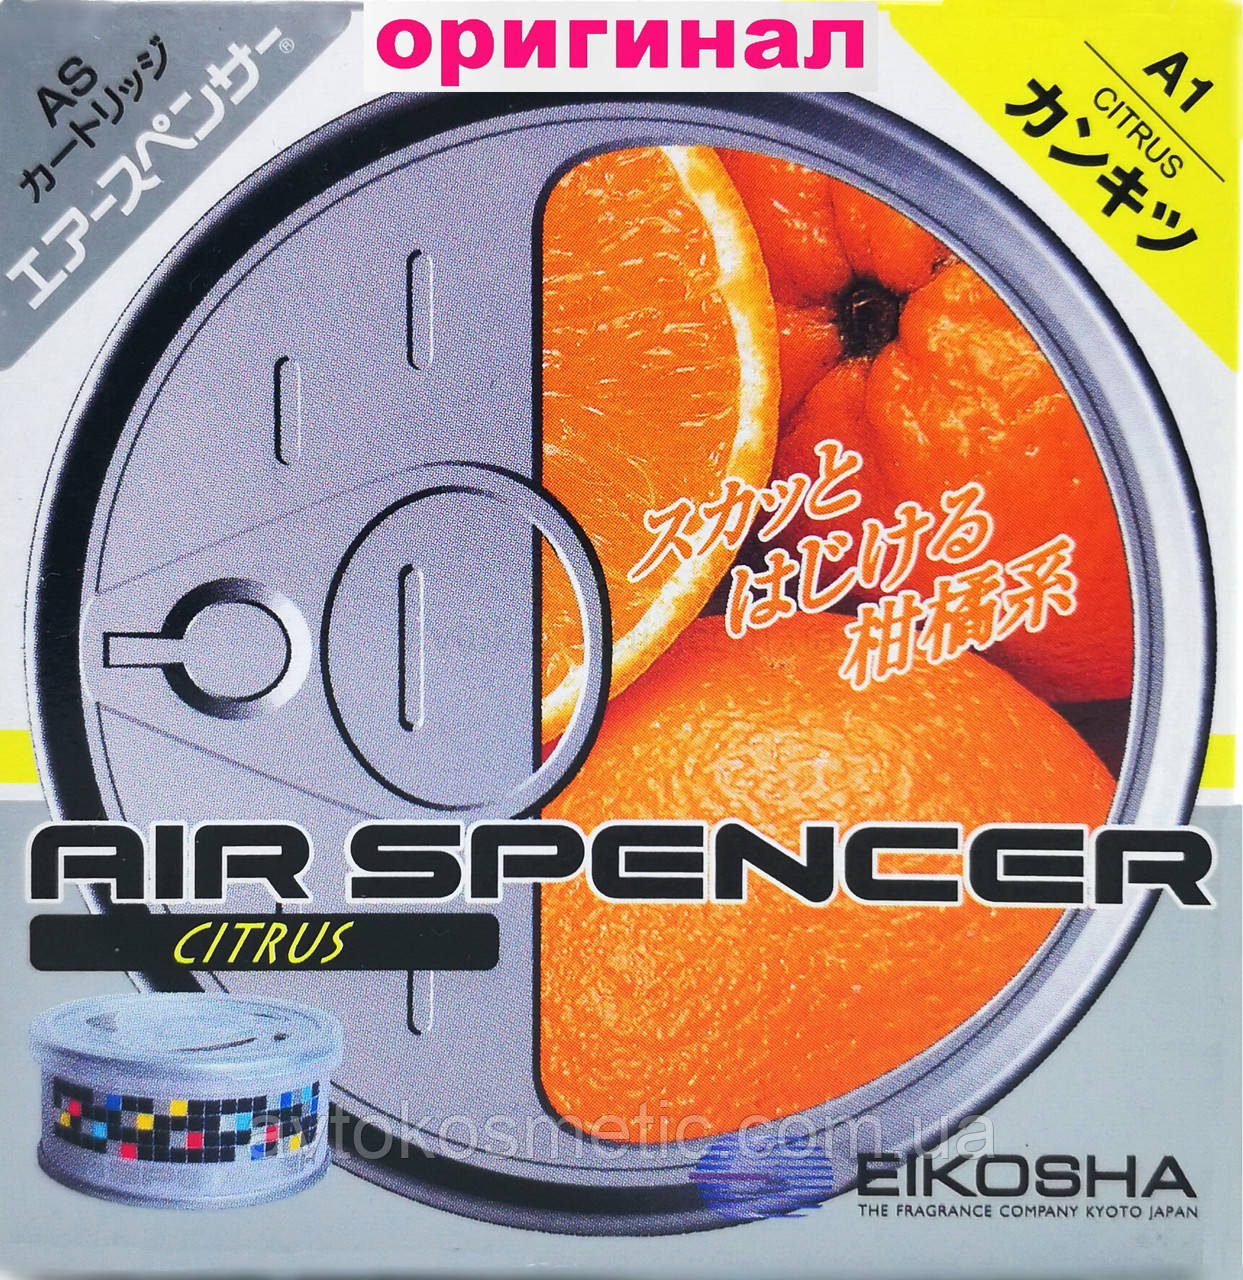 Ароматизатор Eikosha Air Spencer Citrus